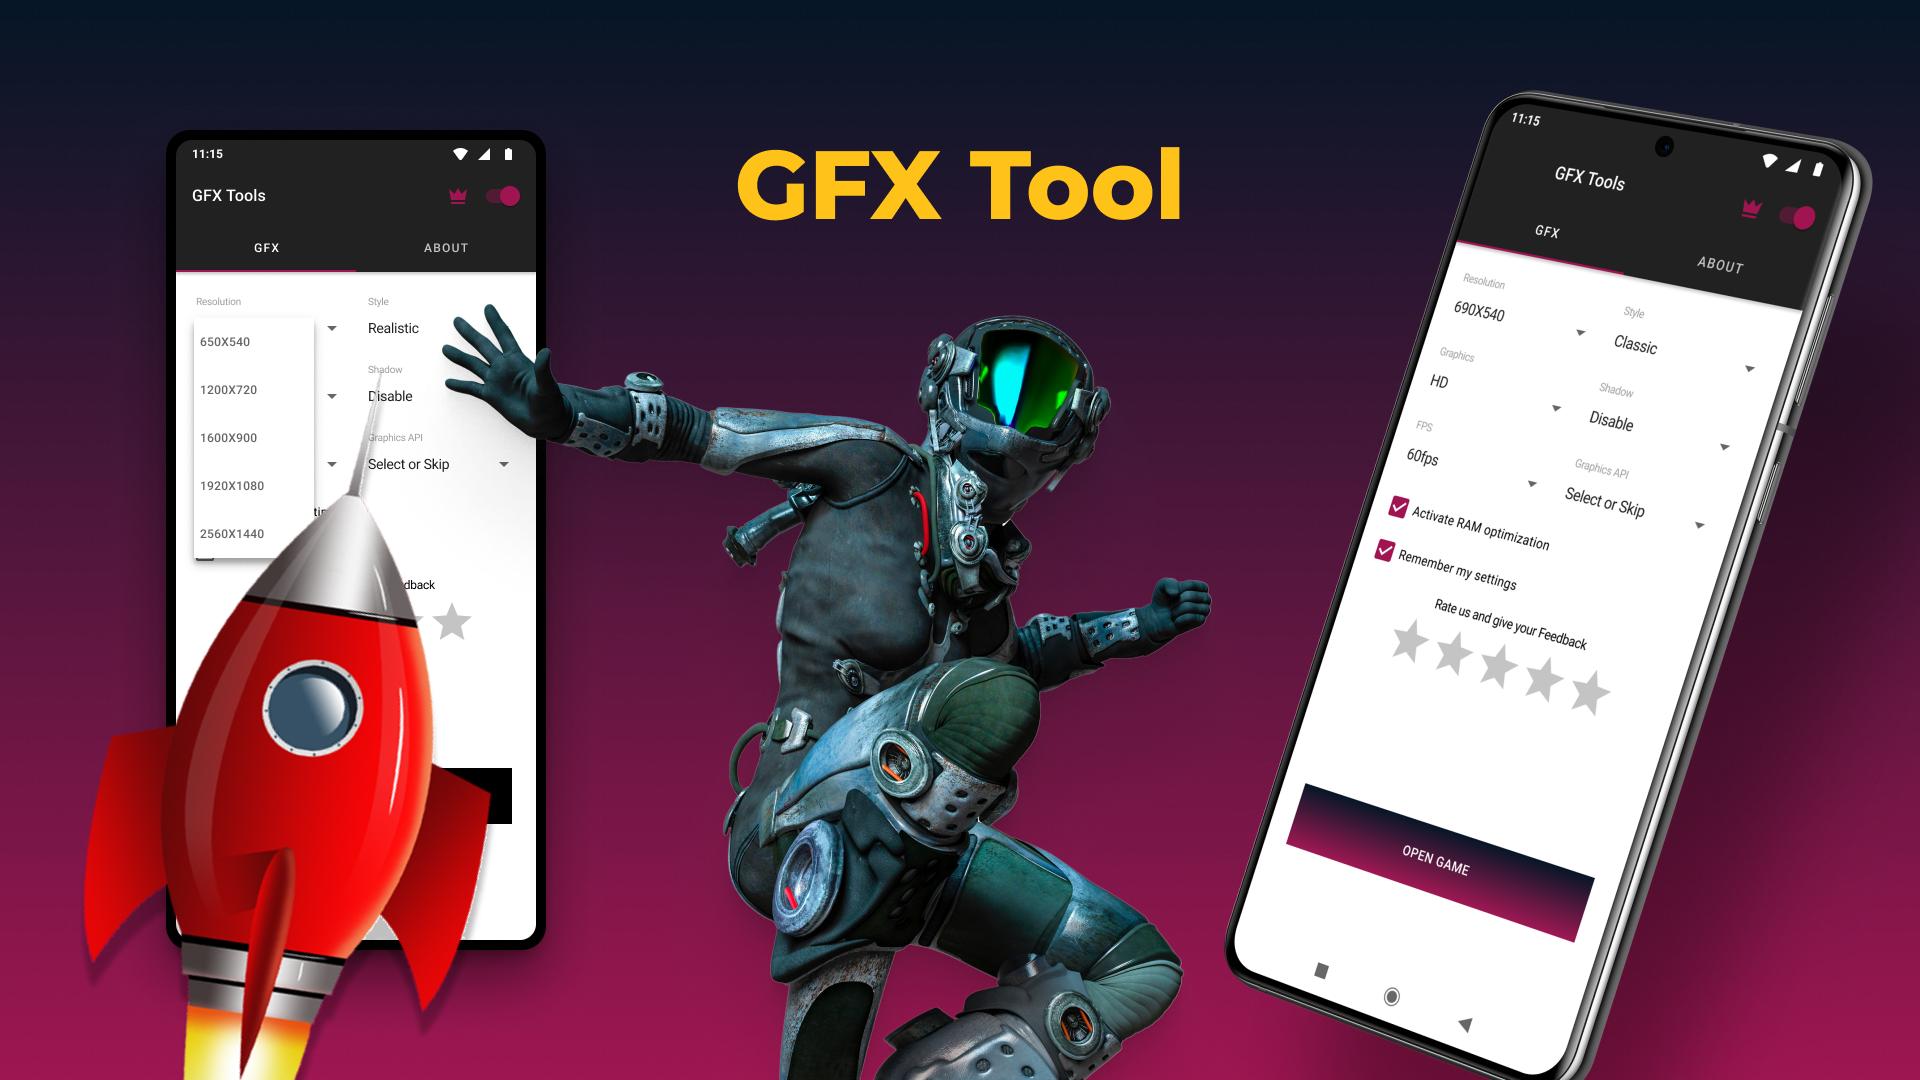 Gfx tool 2